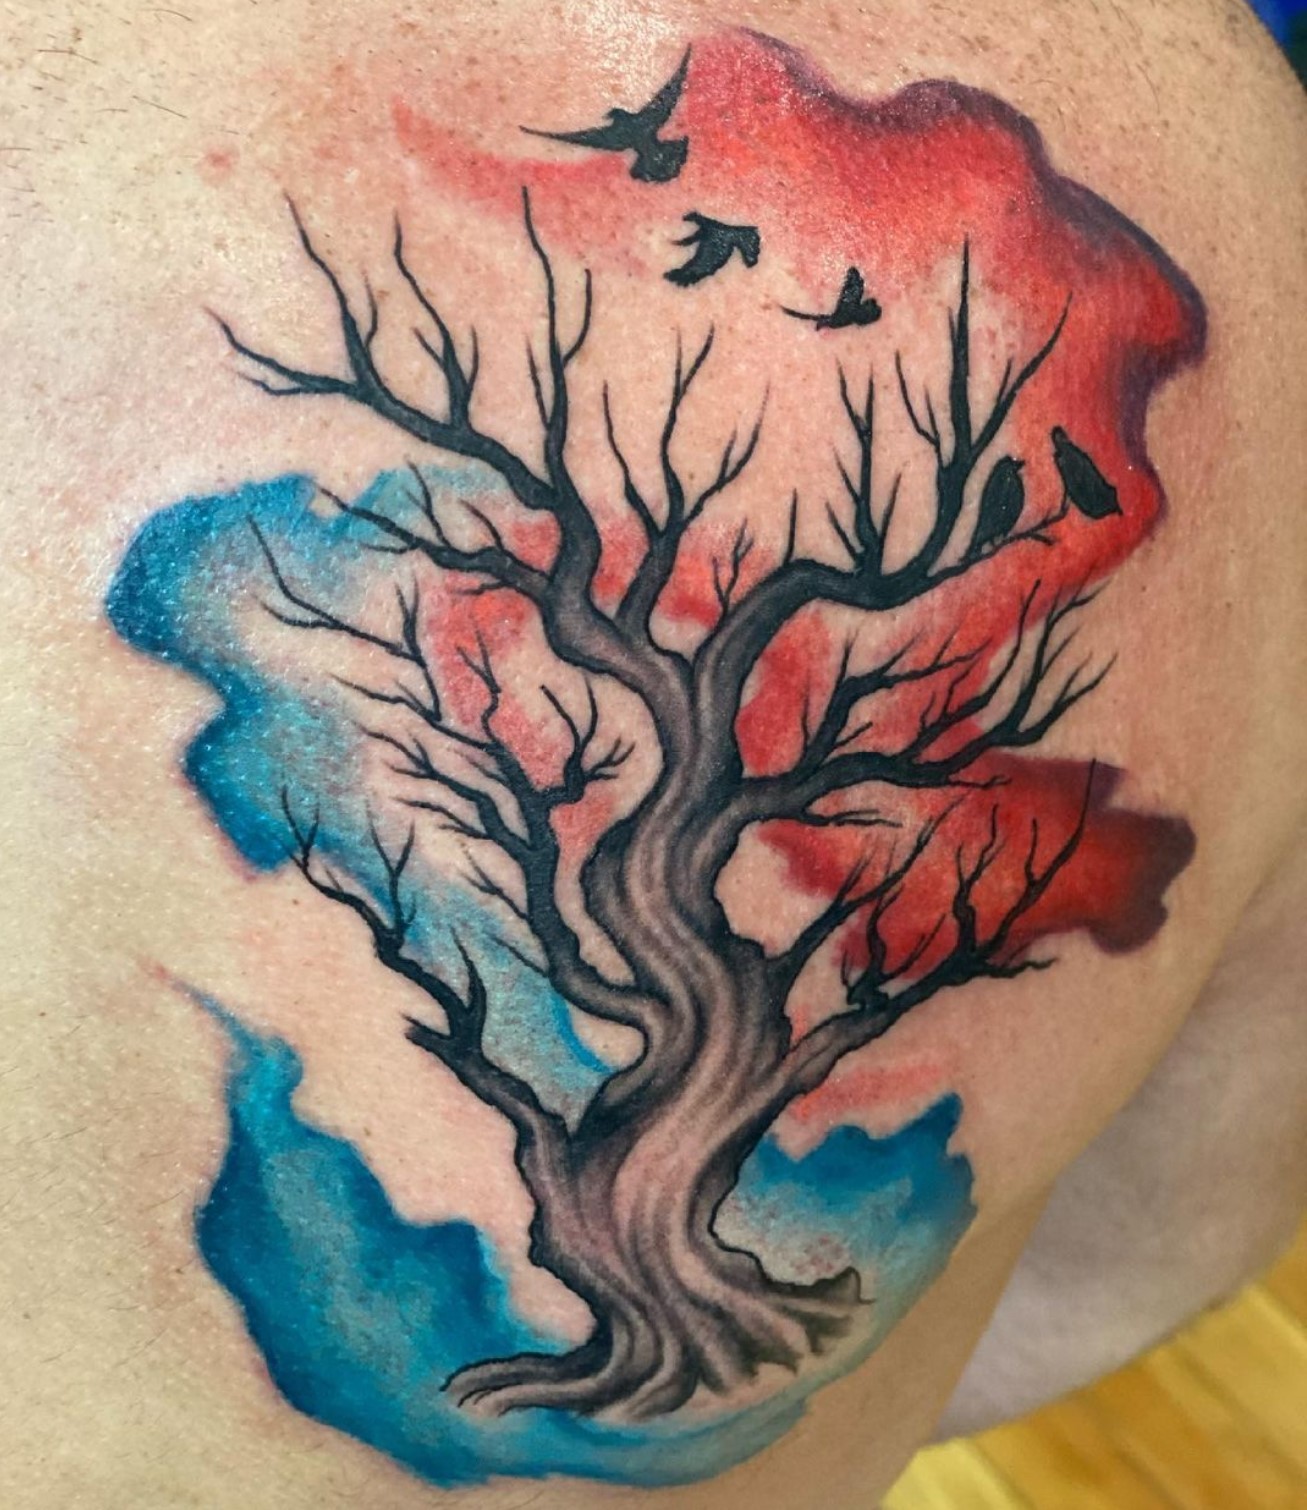 Watercolor Tree Tattoo On Wrist